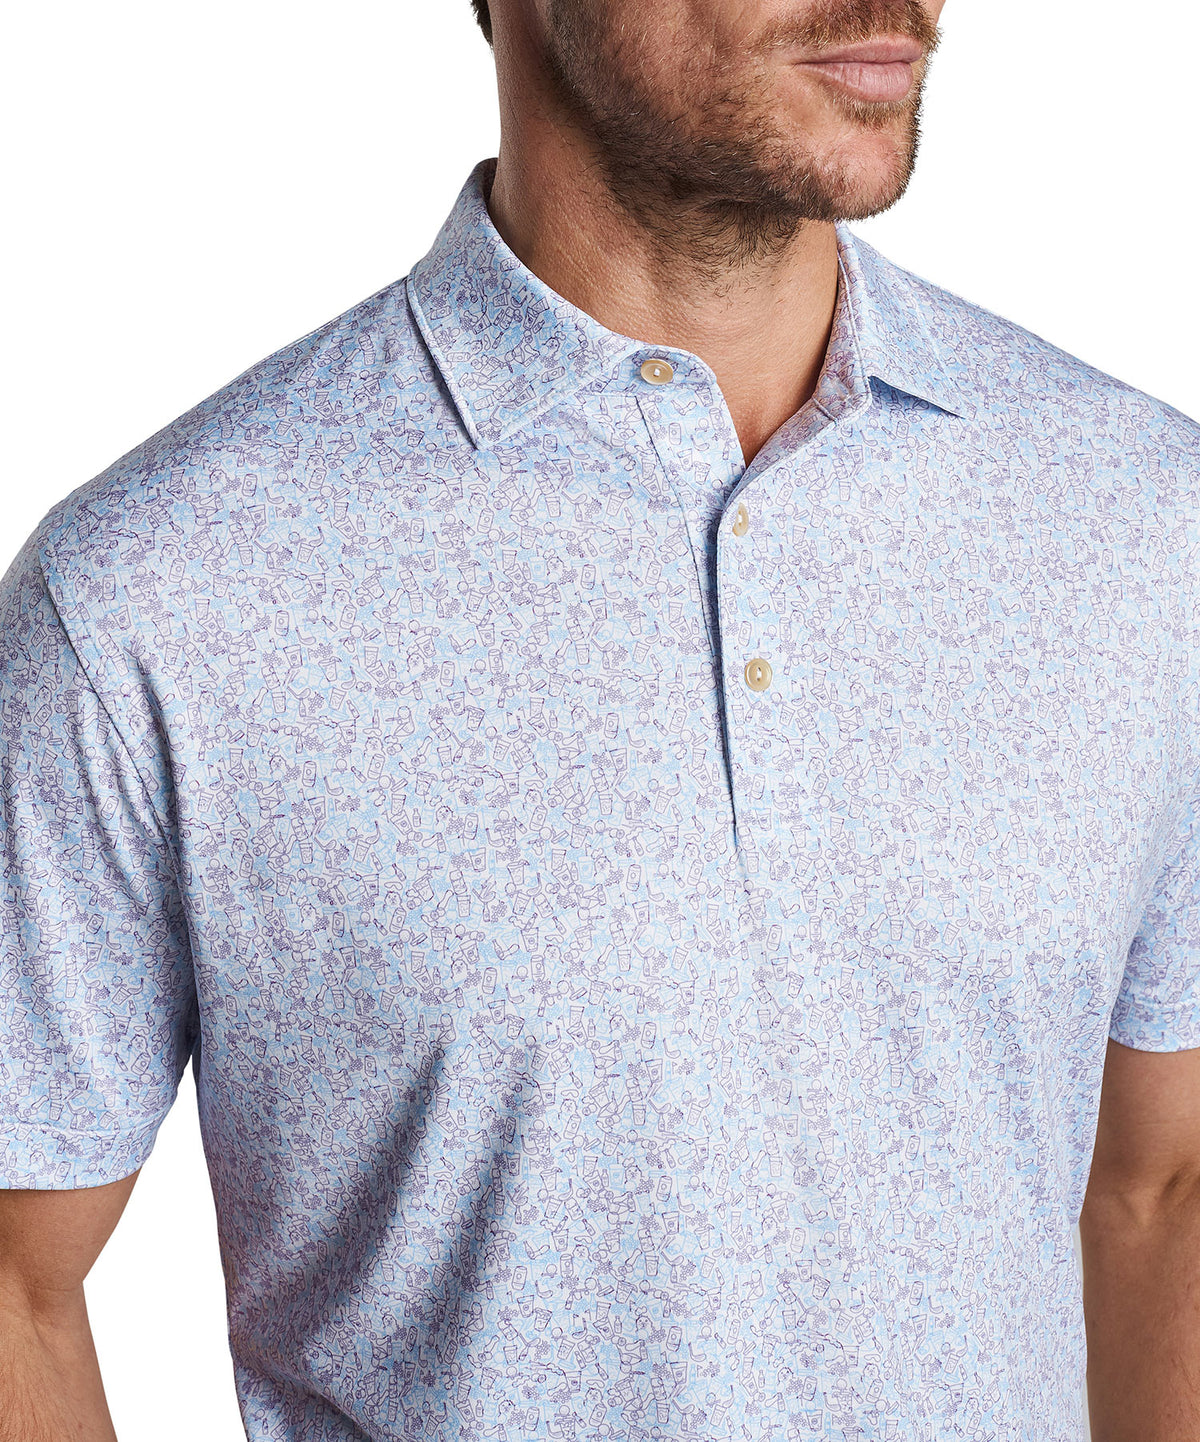 Peter Millar Short Sleeve Dazed and Transfused Print Polo Knit Shirt, Men's Big & Tall